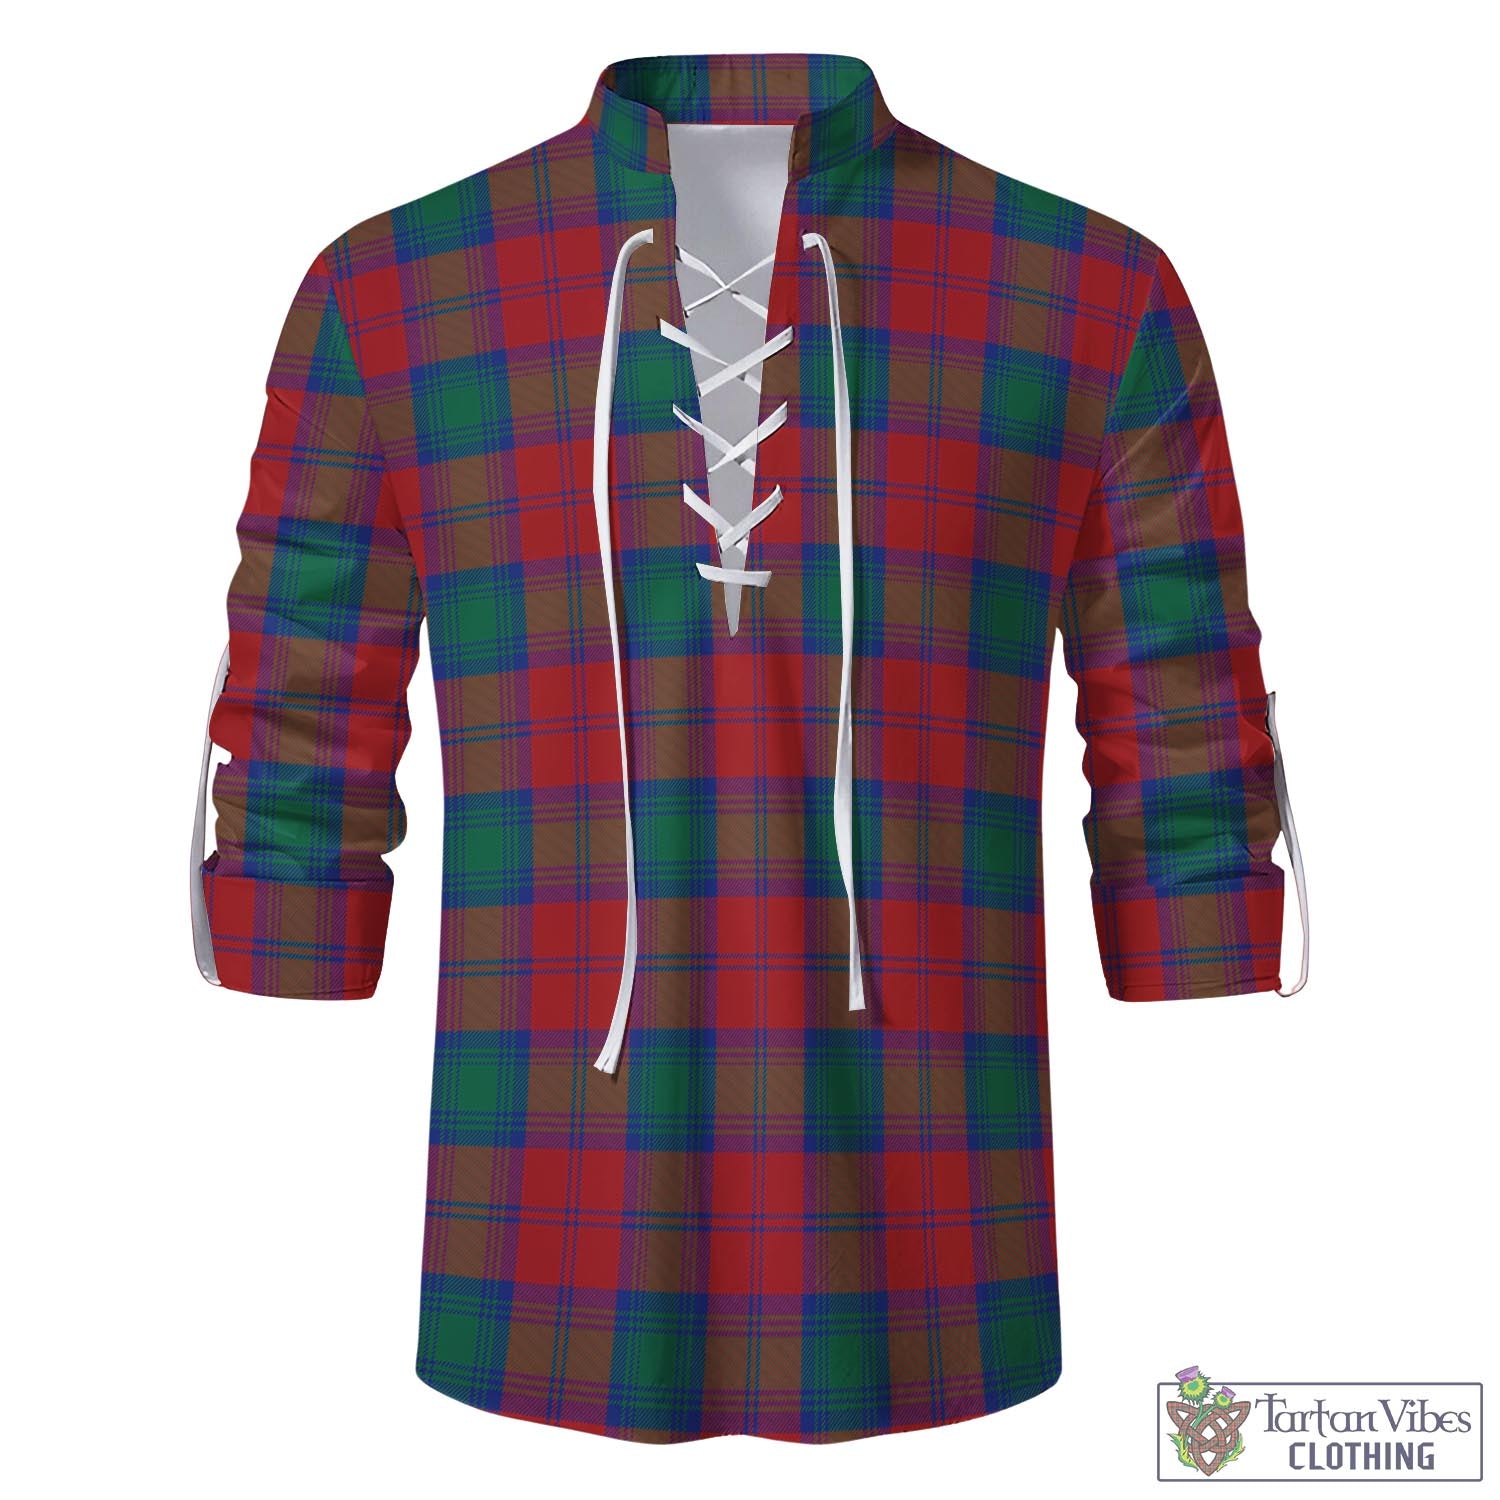 Tartan Vibes Clothing Auchinleck Tartan Men's Scottish Traditional Jacobite Ghillie Kilt Shirt